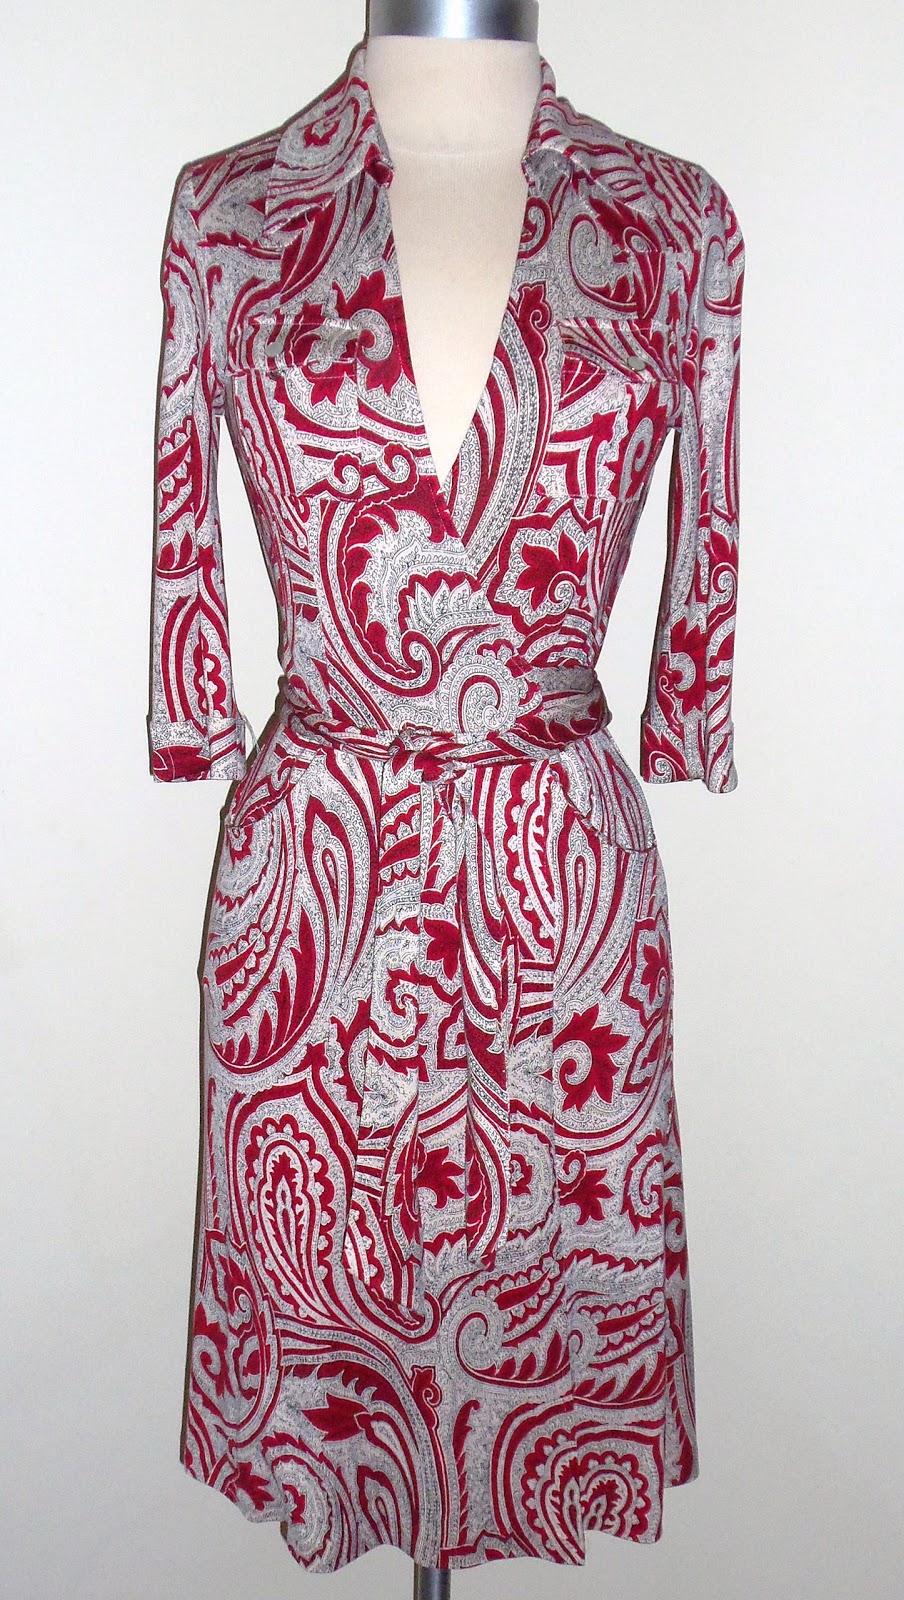 Thrifty Chic Shop: “To feel like a woman, wear a dress” - Diane von ...